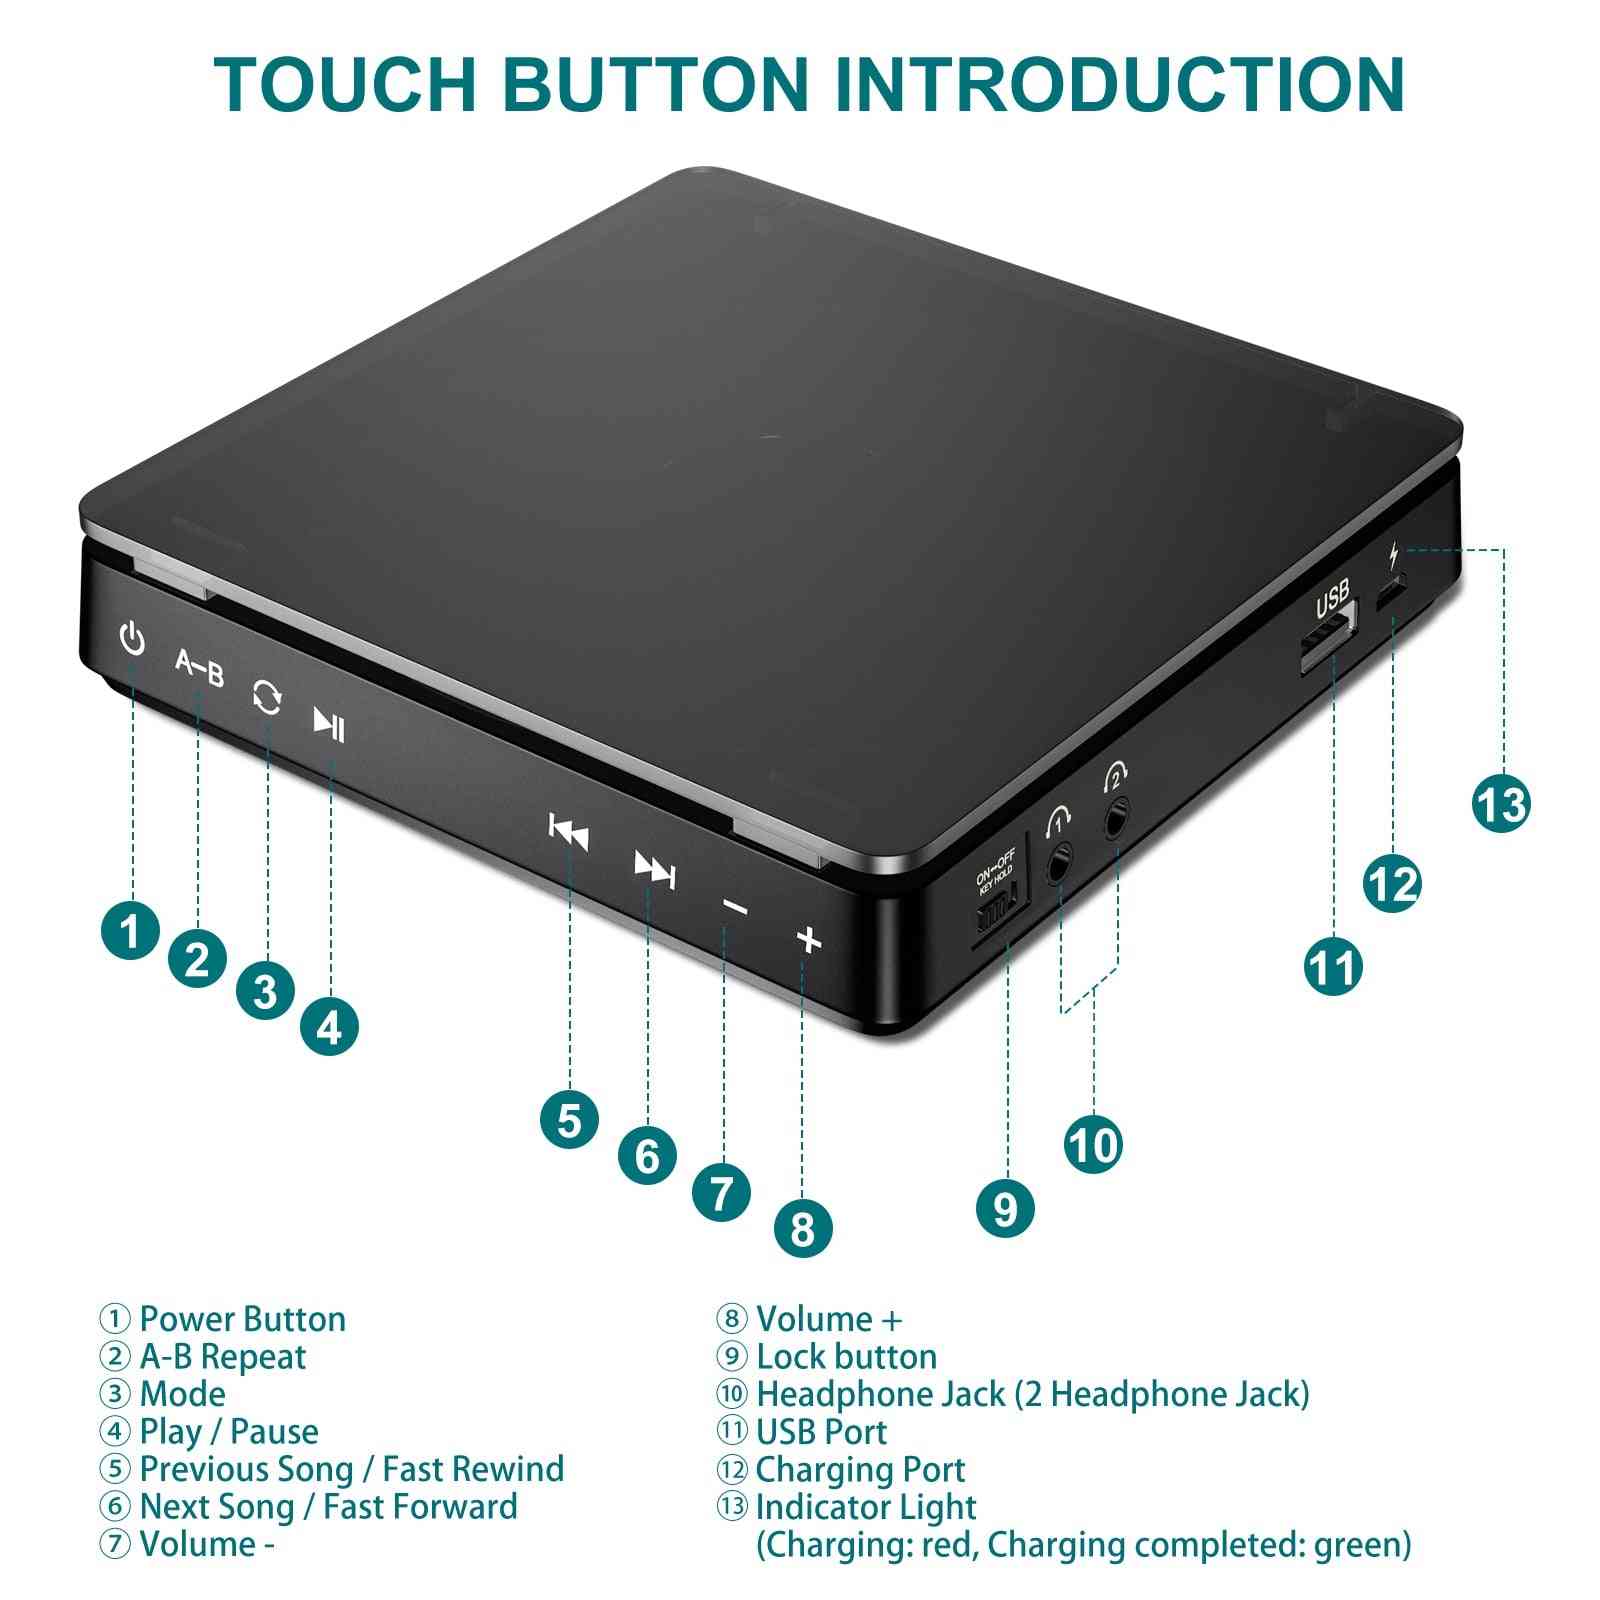 Portable- Cd Player Double-headphone, Touch Button Walkman